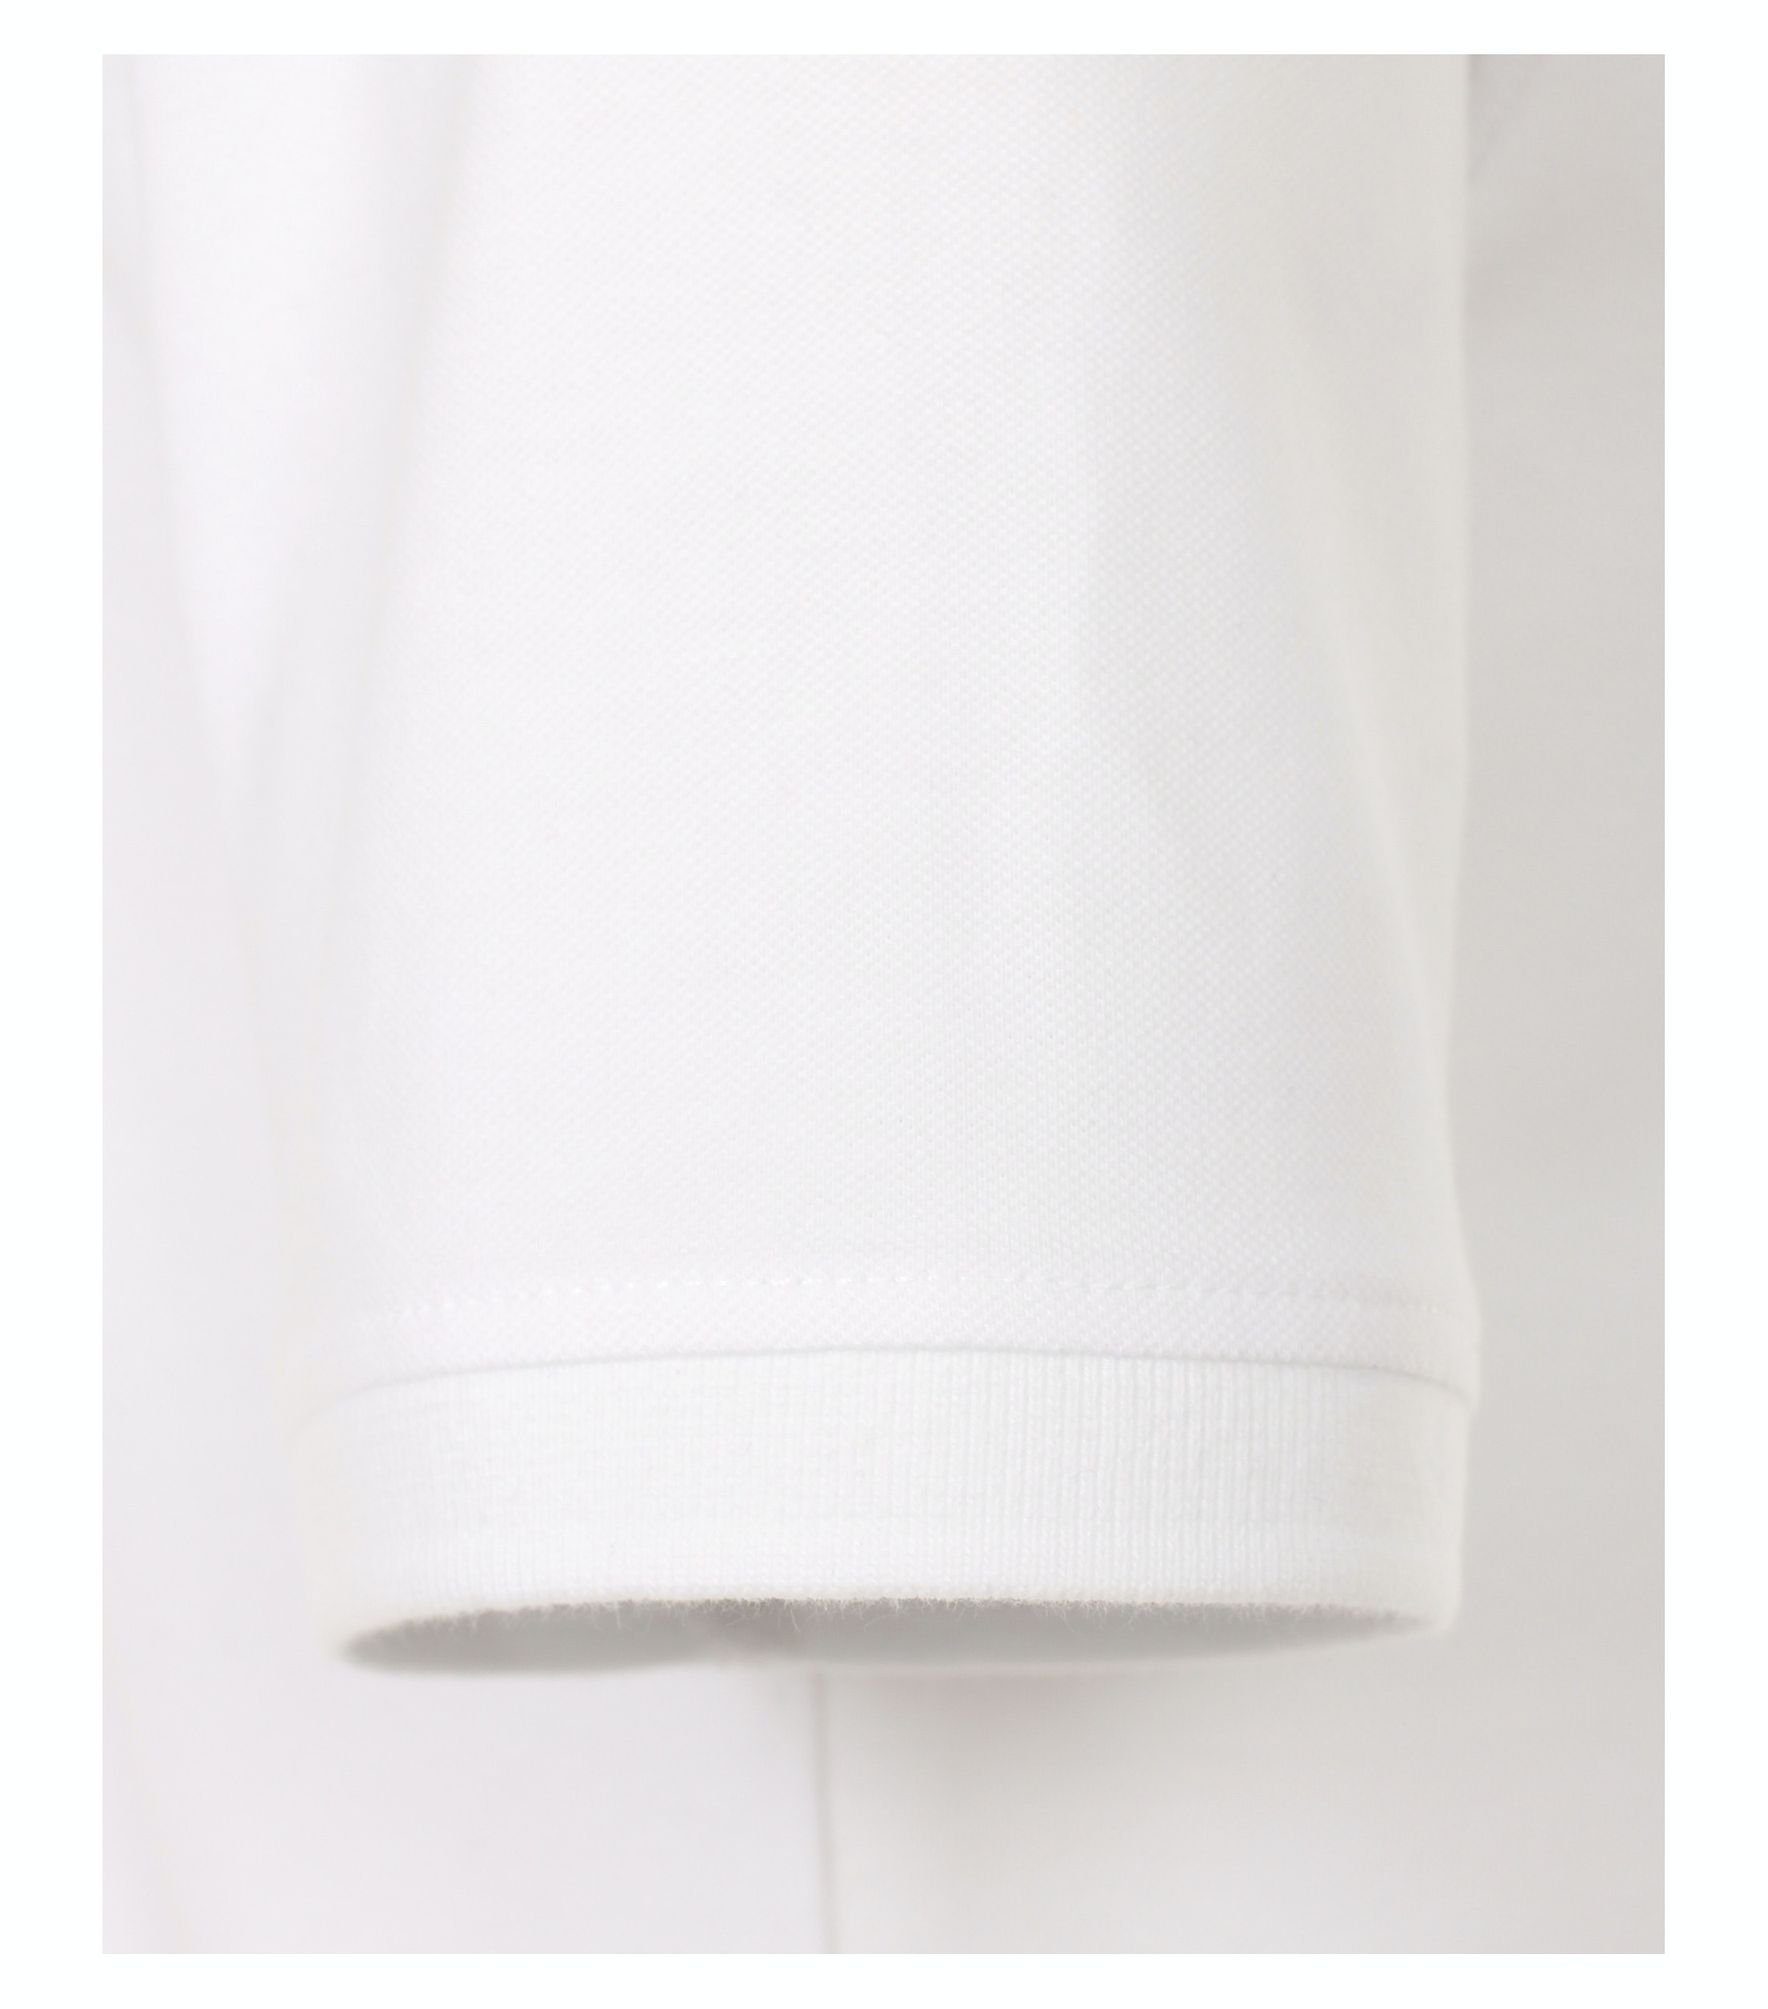 Poloshirt CASAMODA Polo-Shirt Poloshirt Weiß(000) unifarben